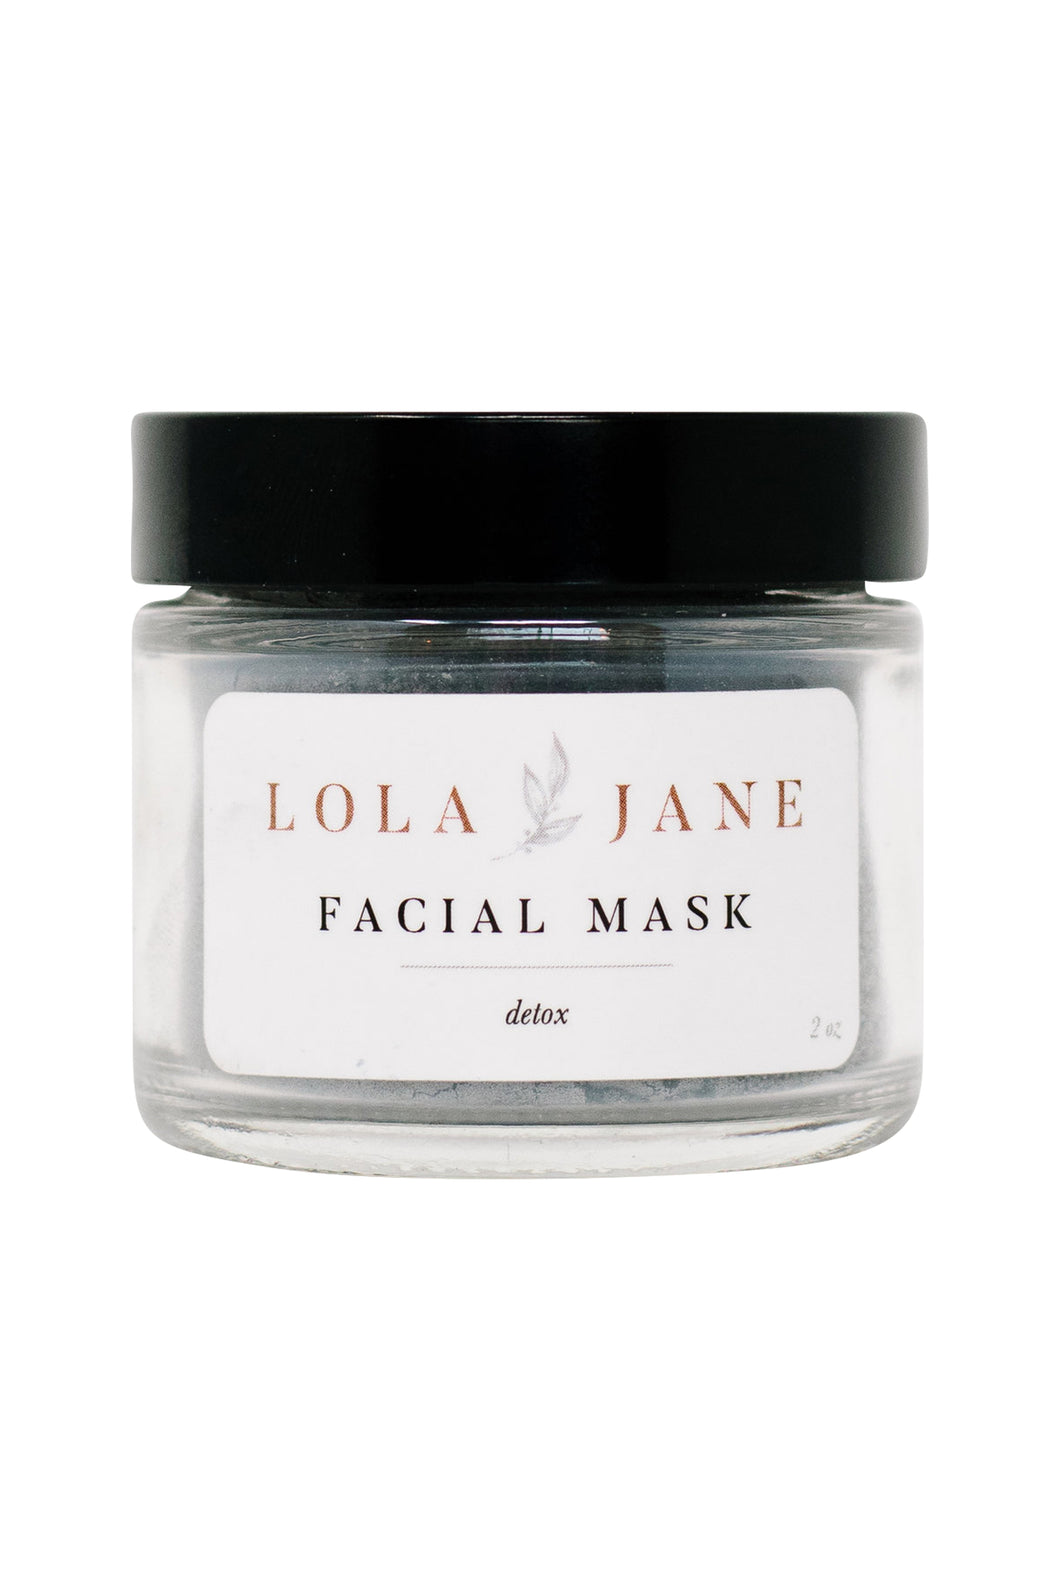 Lola Jane Facial Mask- Detox